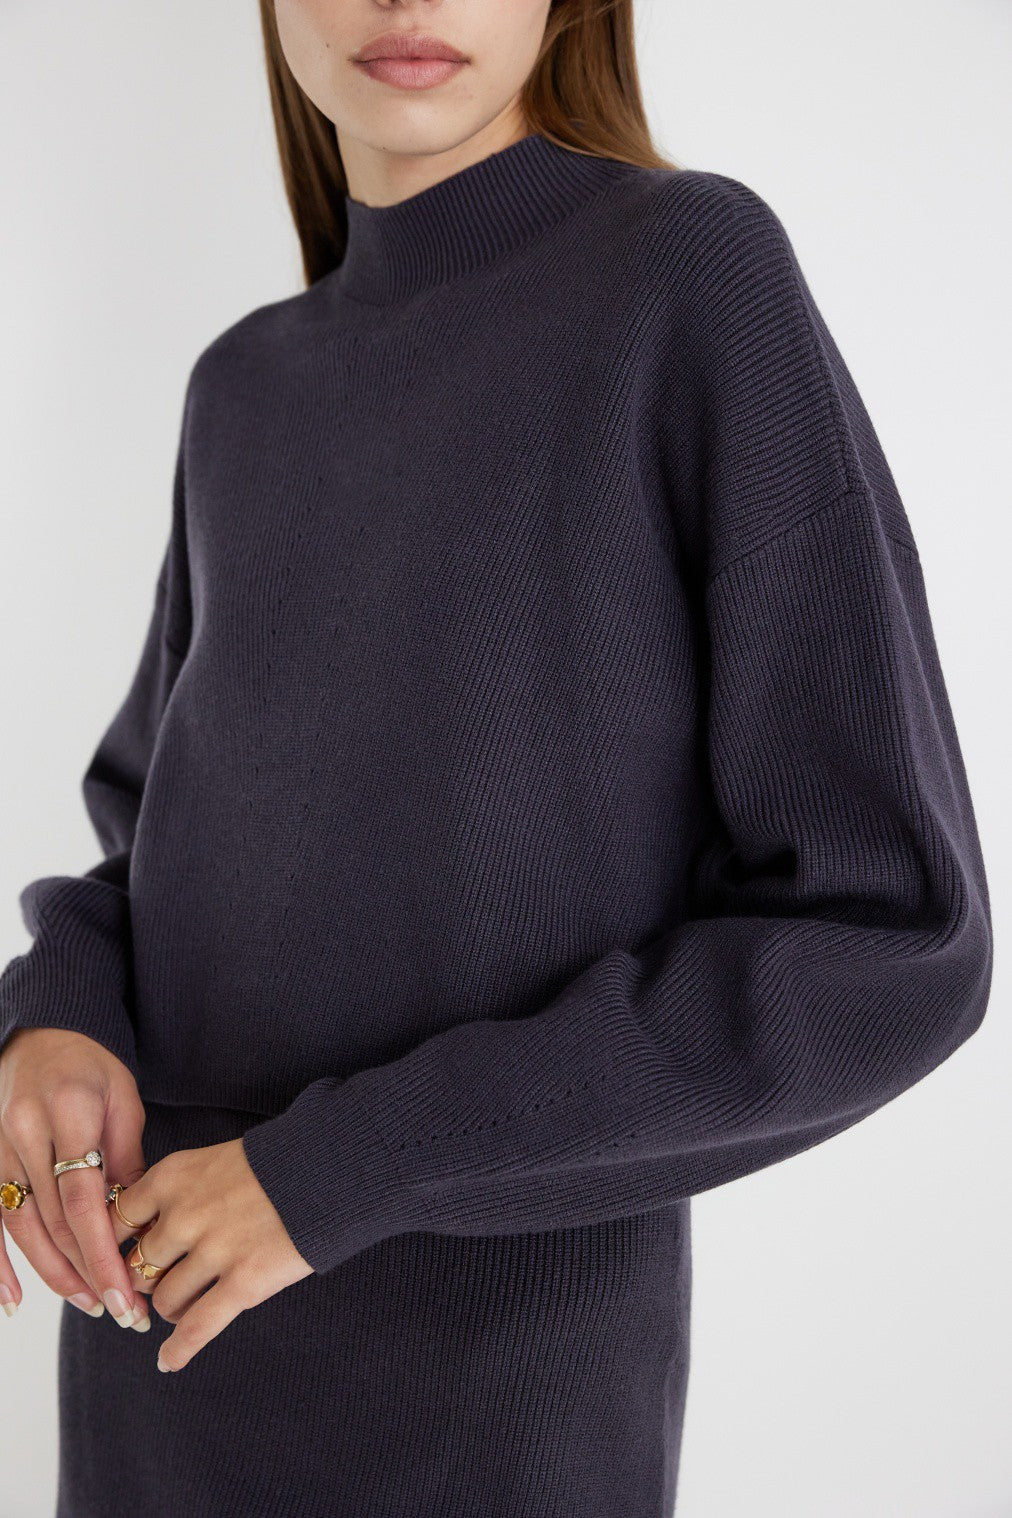 Ottie Sweater - Premium  Denim from Mod Ref - Just $50.40! Shop now at shopthedenimbar